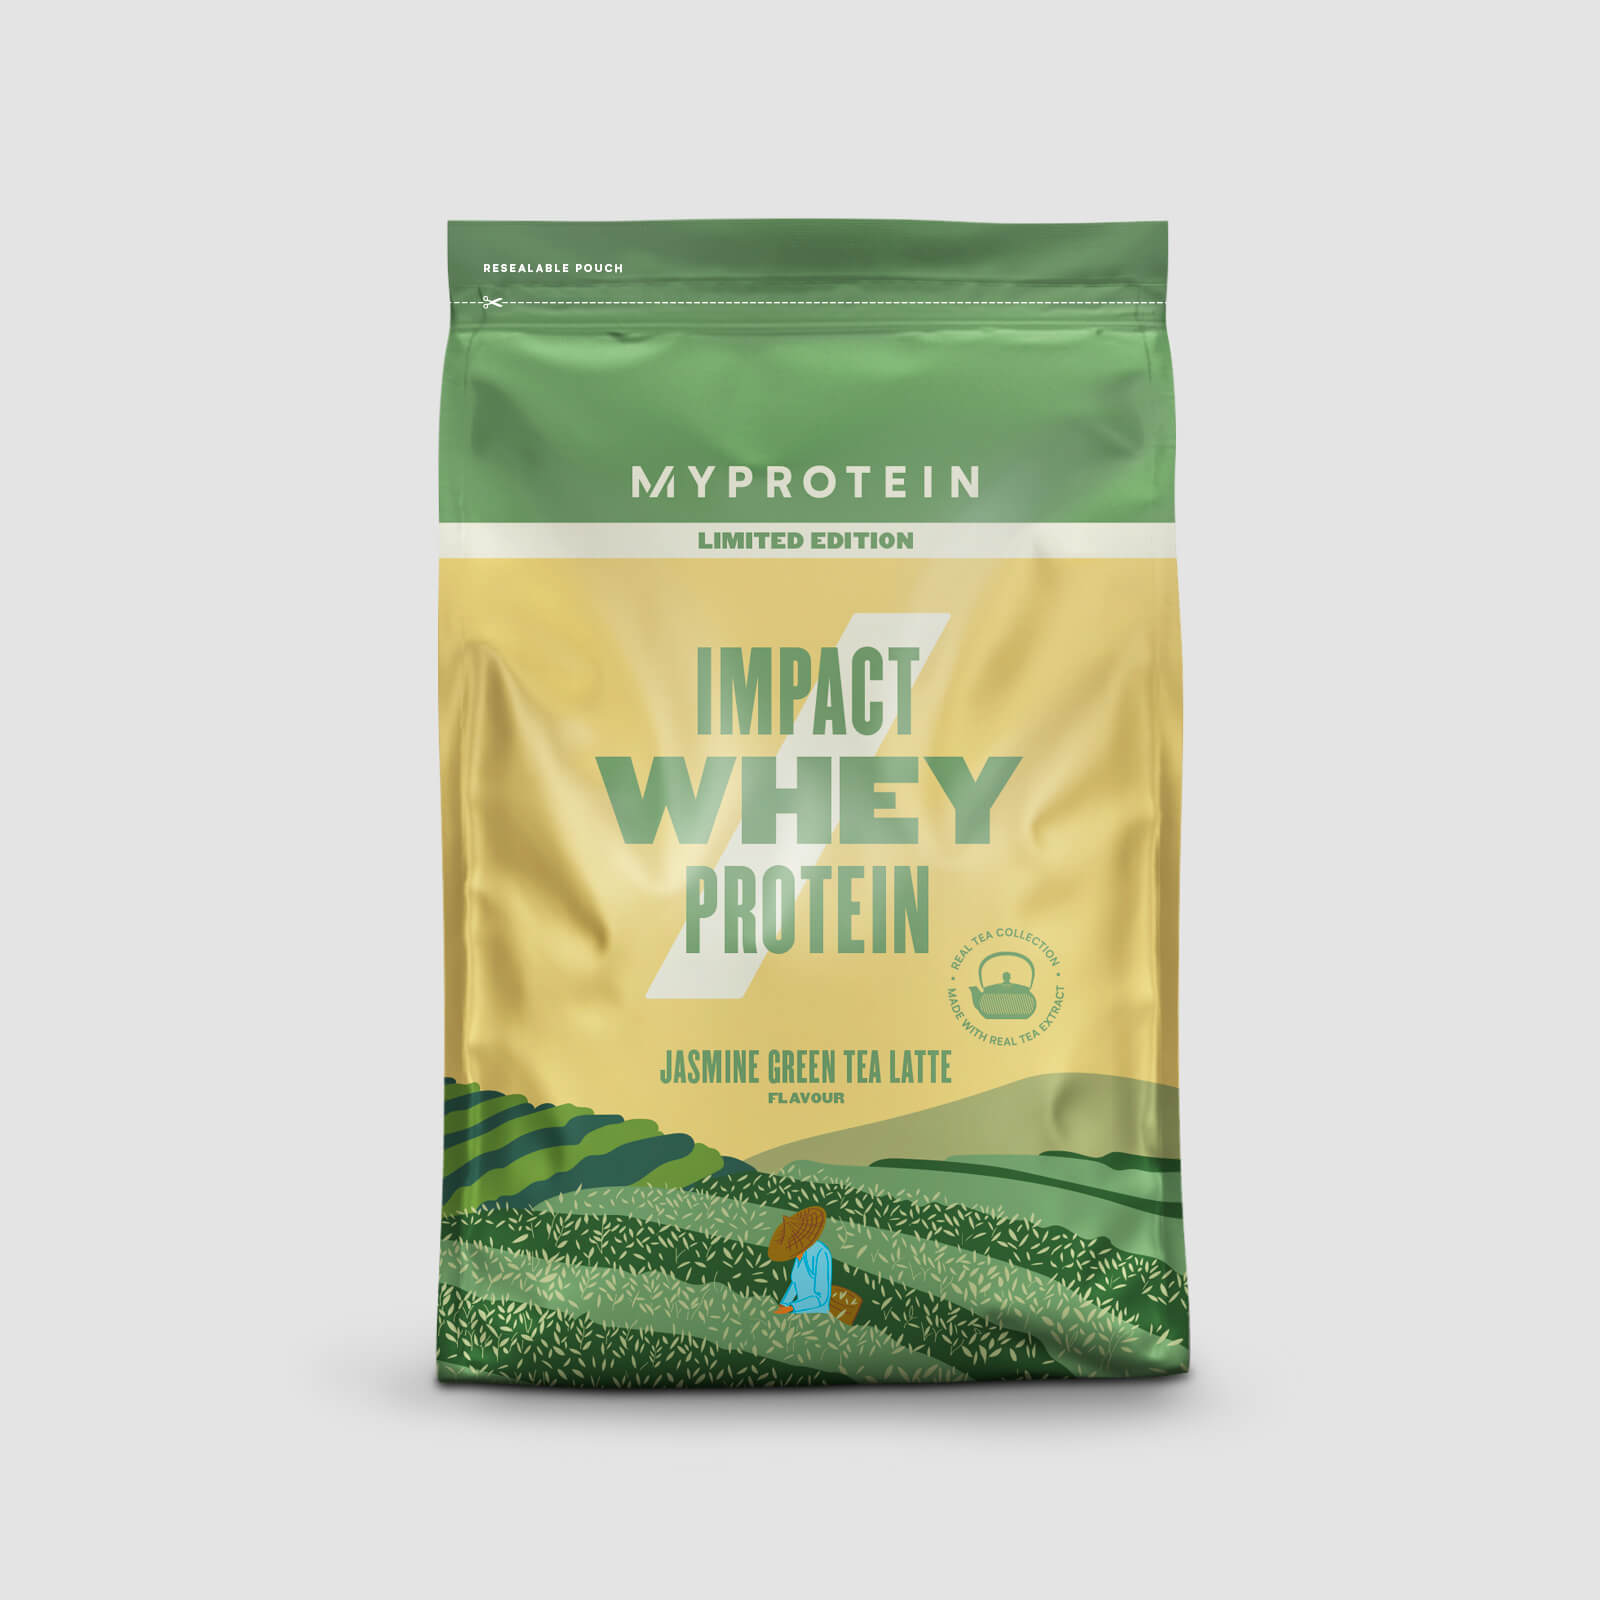 Сывороточный протеин (Impact Whey Protein) - 250g - Jasmine Green Tea Latte